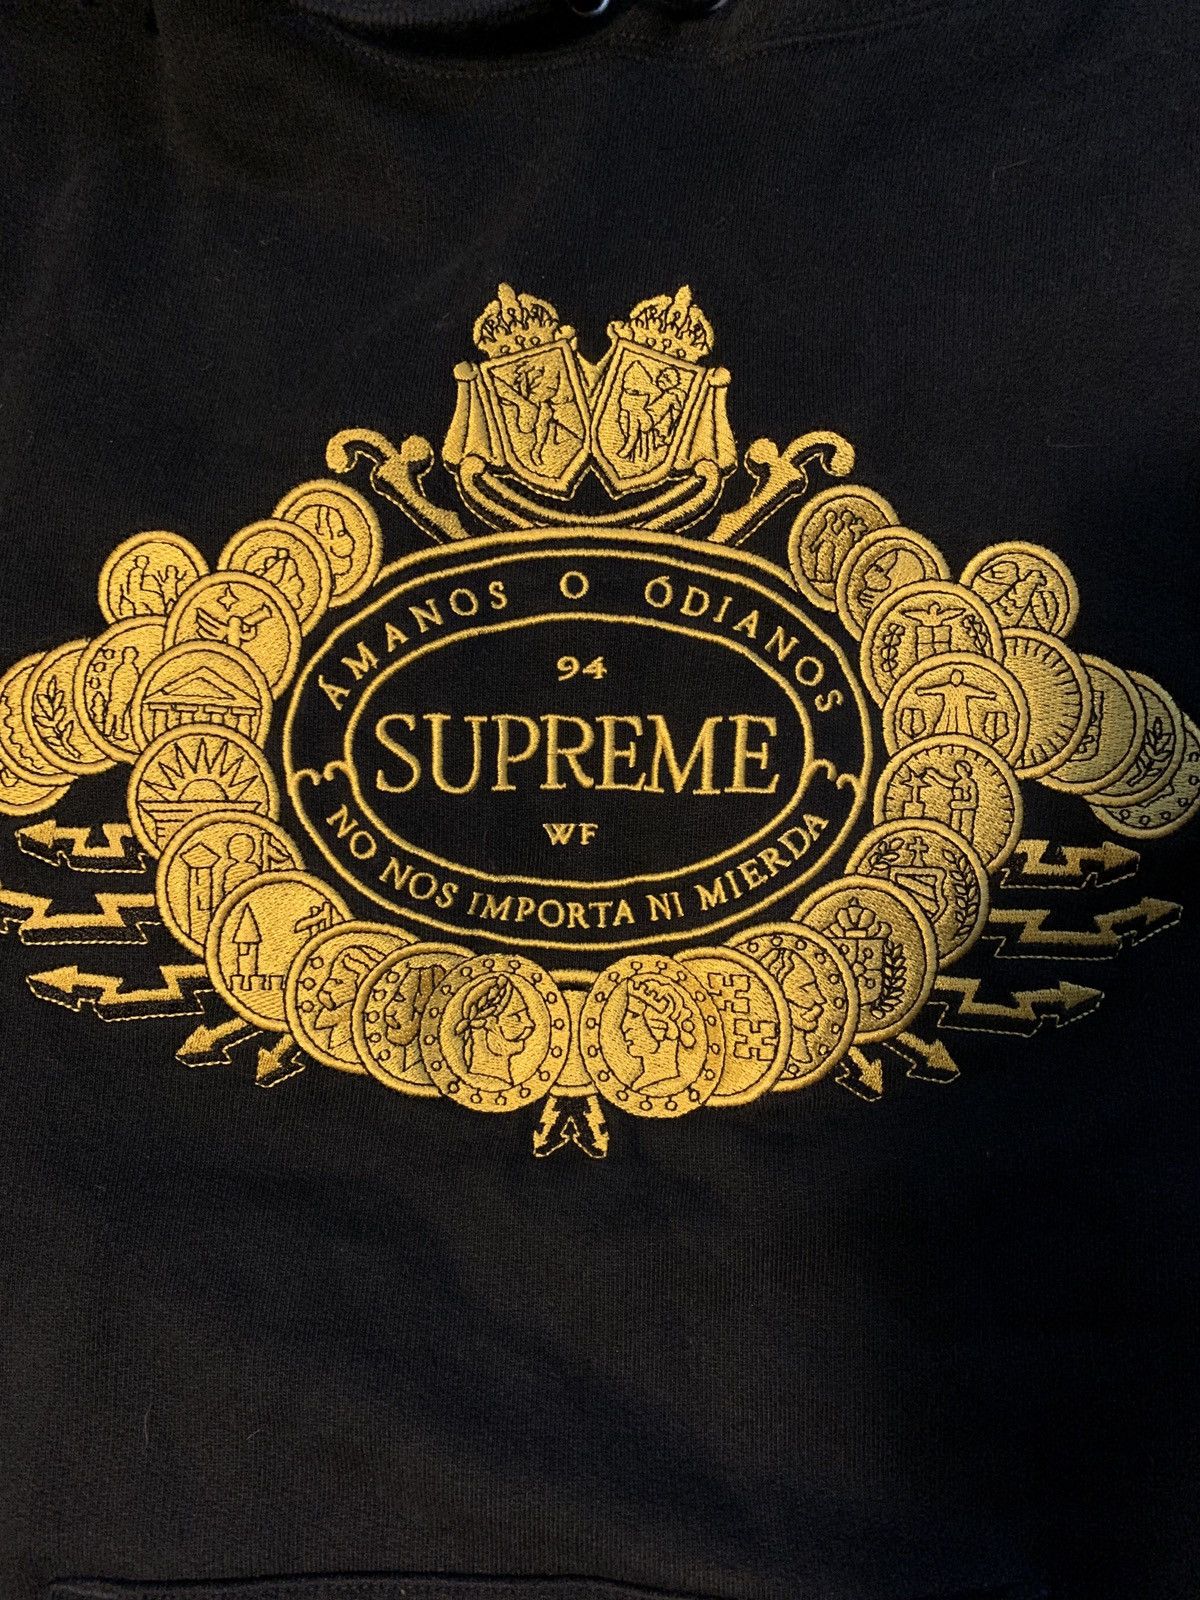 Supreme Supreme “Amanos o Odianos” BLACK Hoodie | Grailed